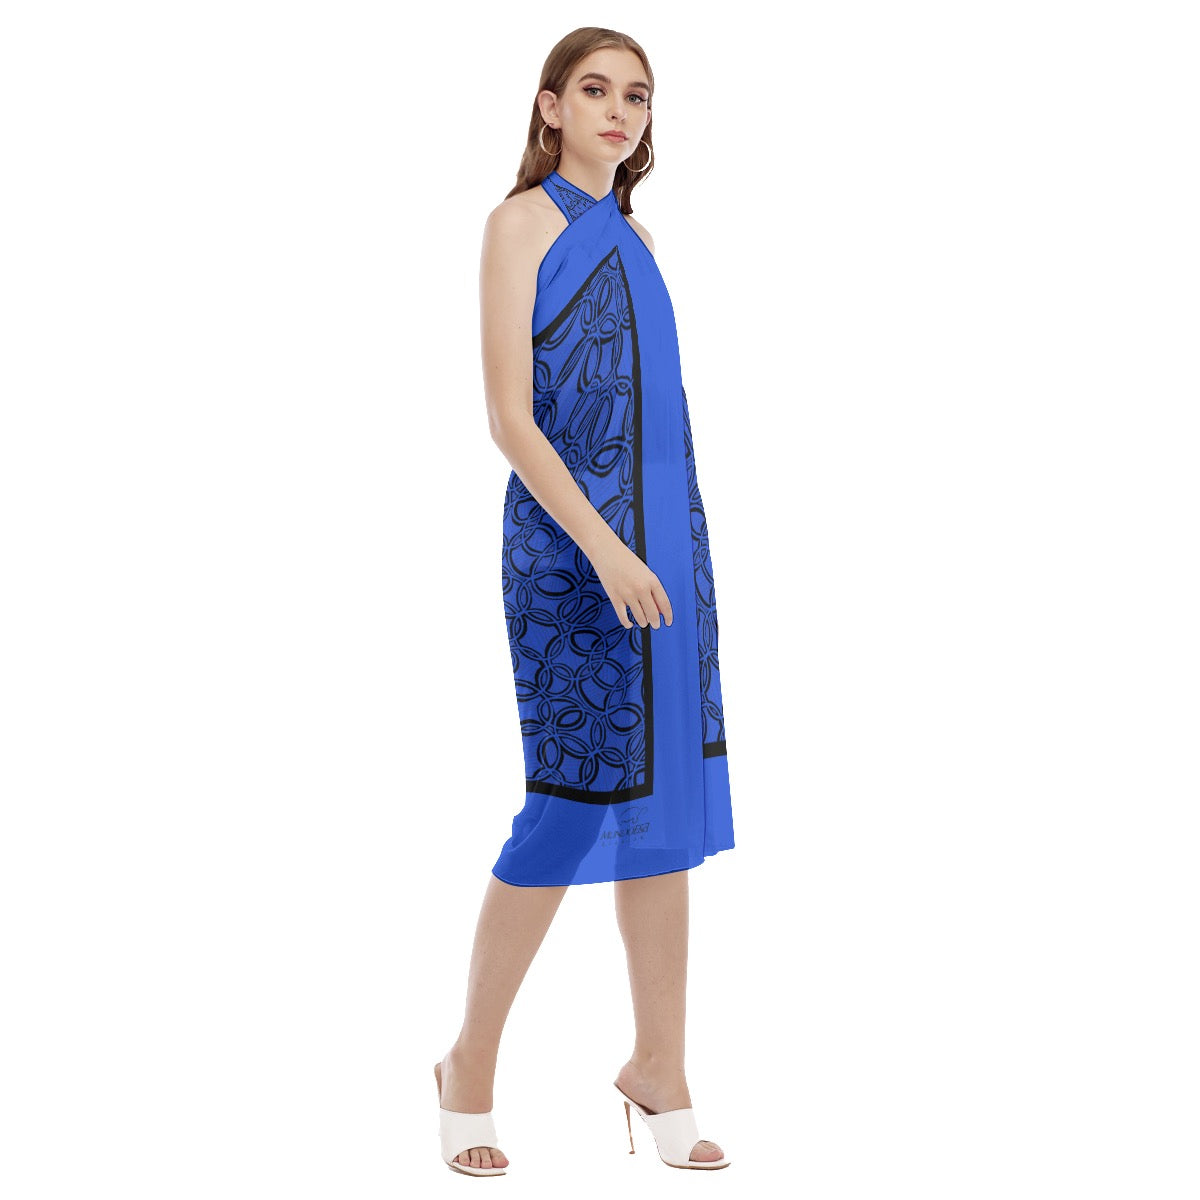 Geometric Blue & Black Women's Beach Dress. Pattern hand-painted by the Designer Maria Alejandra Echenique